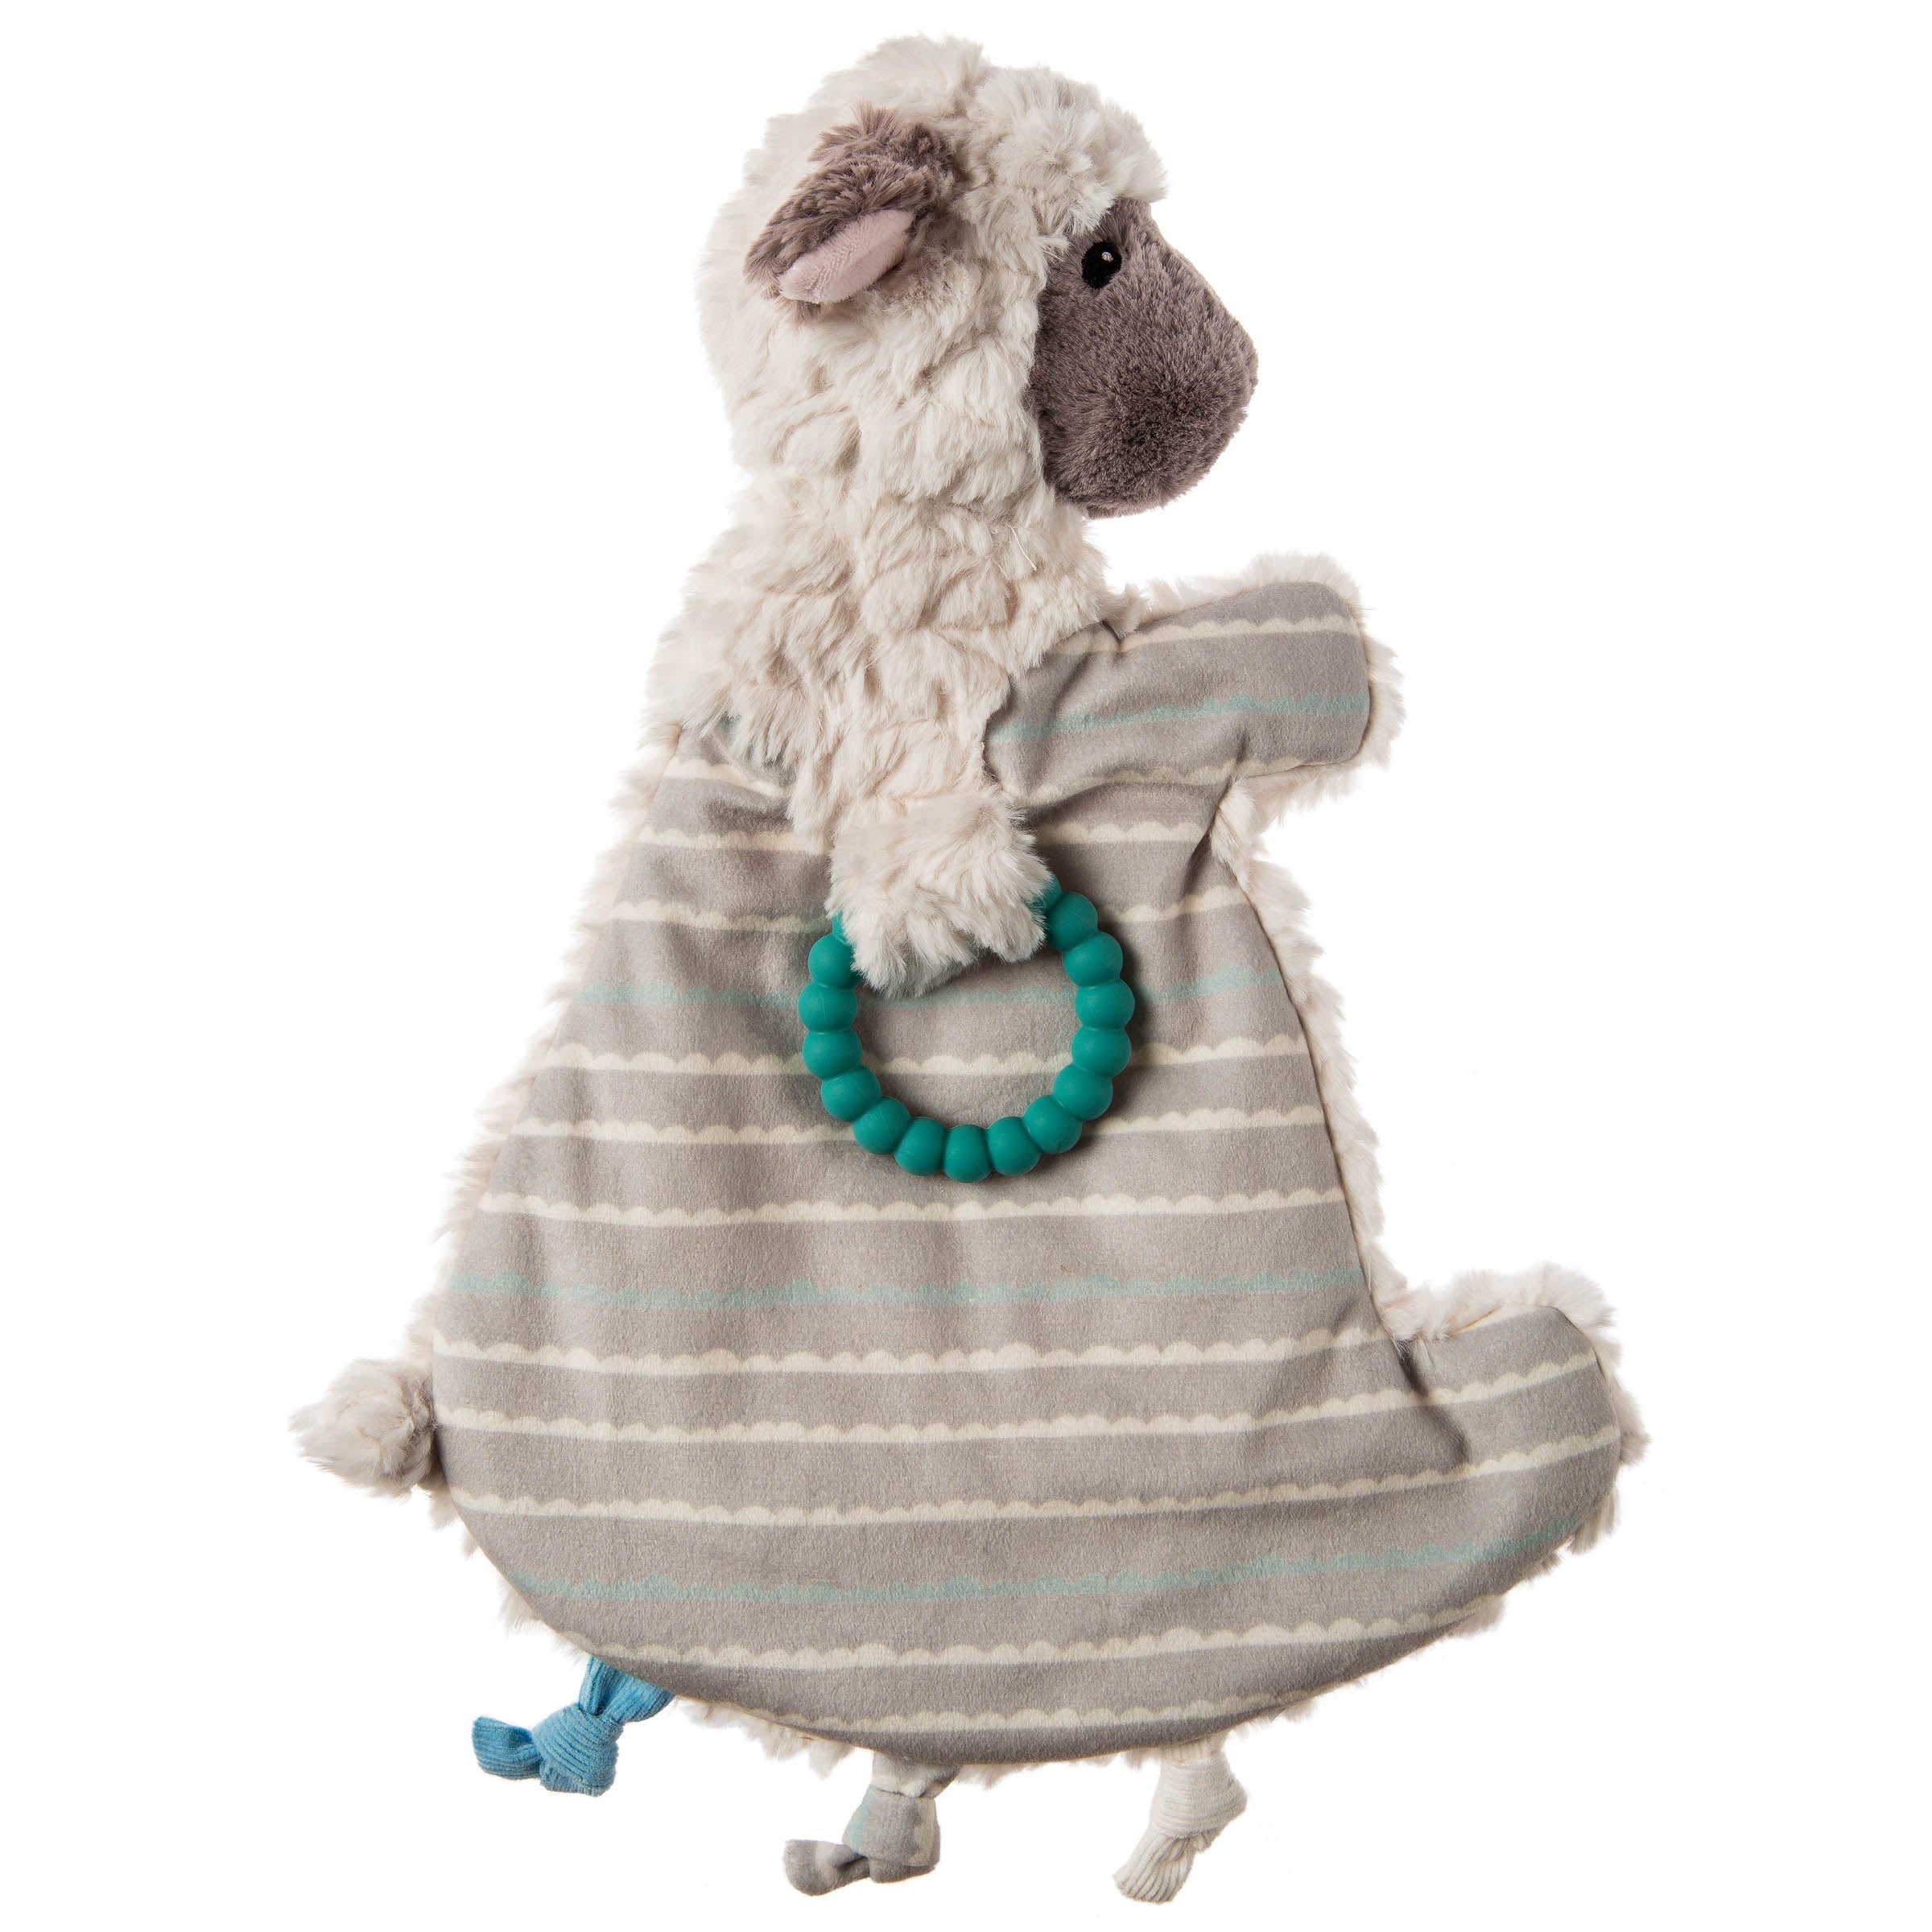 Snuggy Nuggles Lamb Blanket - Twinkle Twinkle Little One